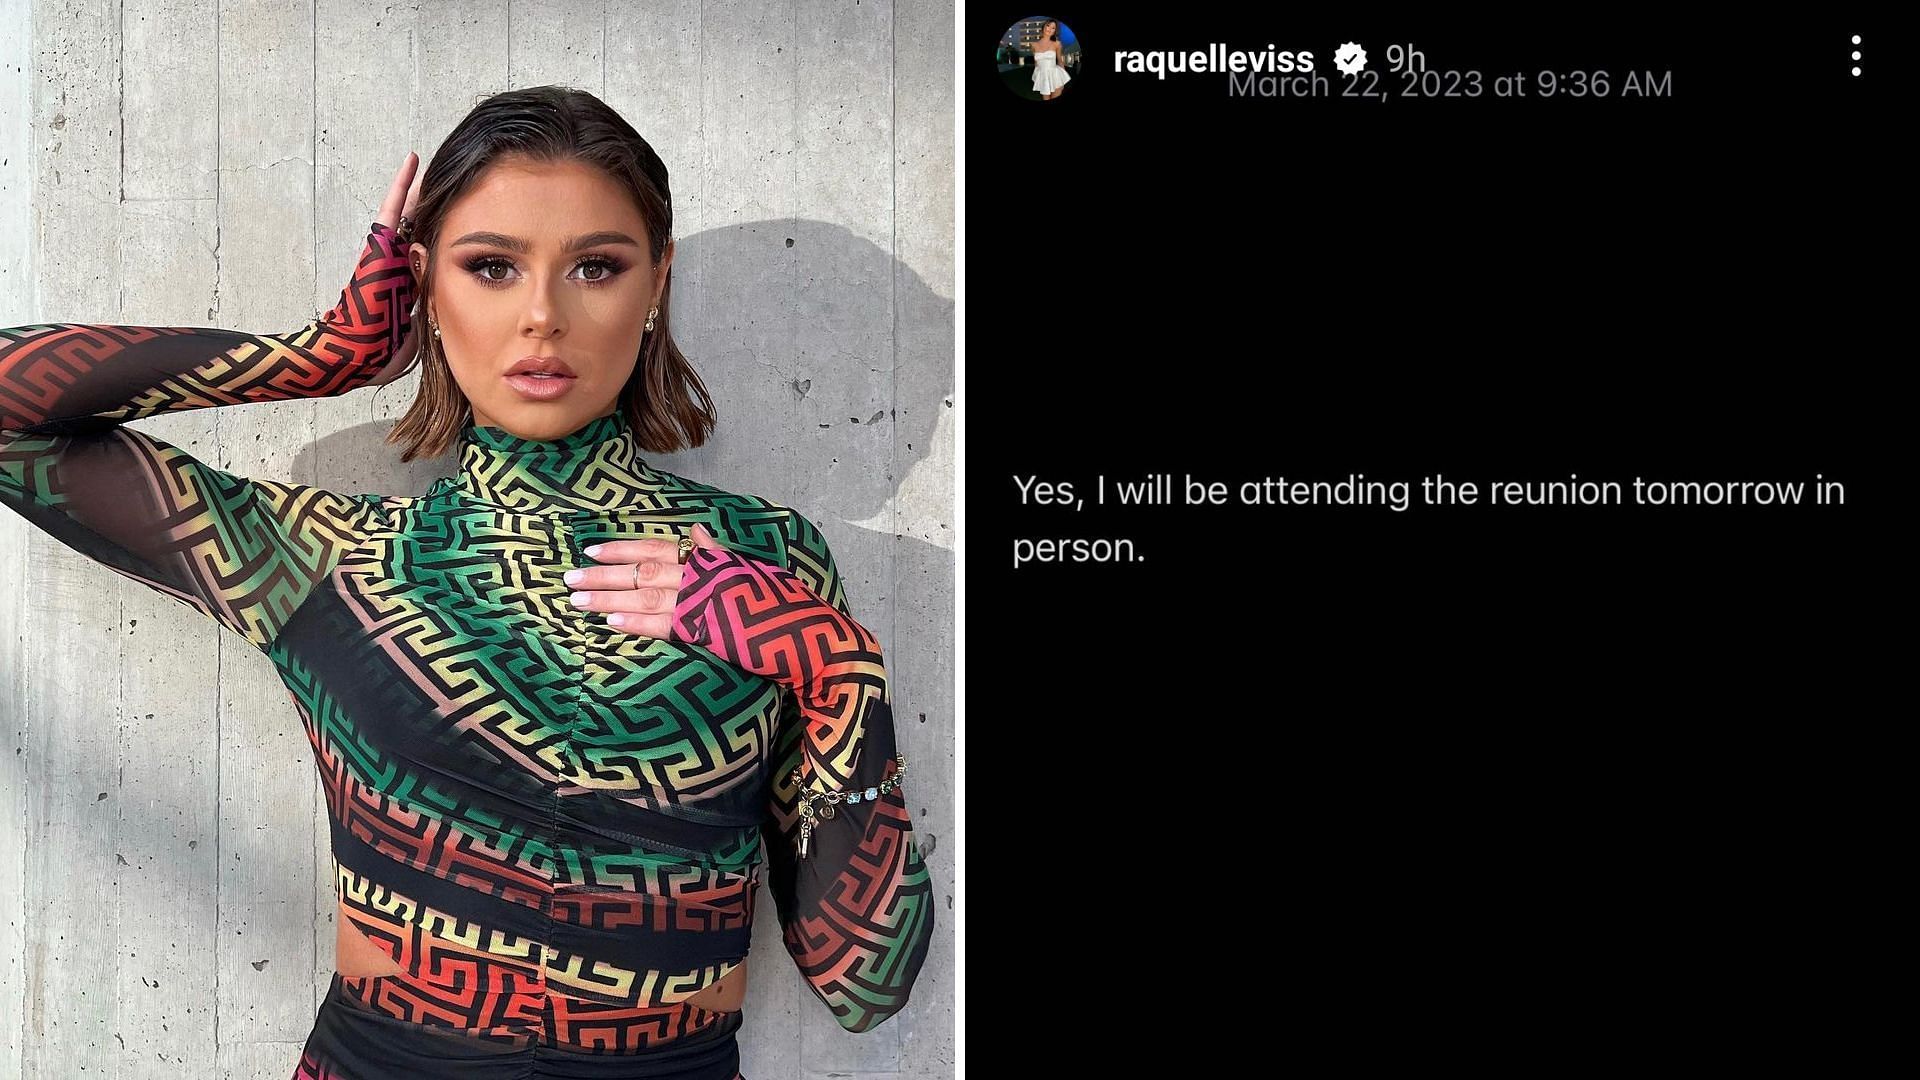 Raquel Leviss confirms attending the Vanderpump Rules reunion (Image via raquelleviss/Instagram)